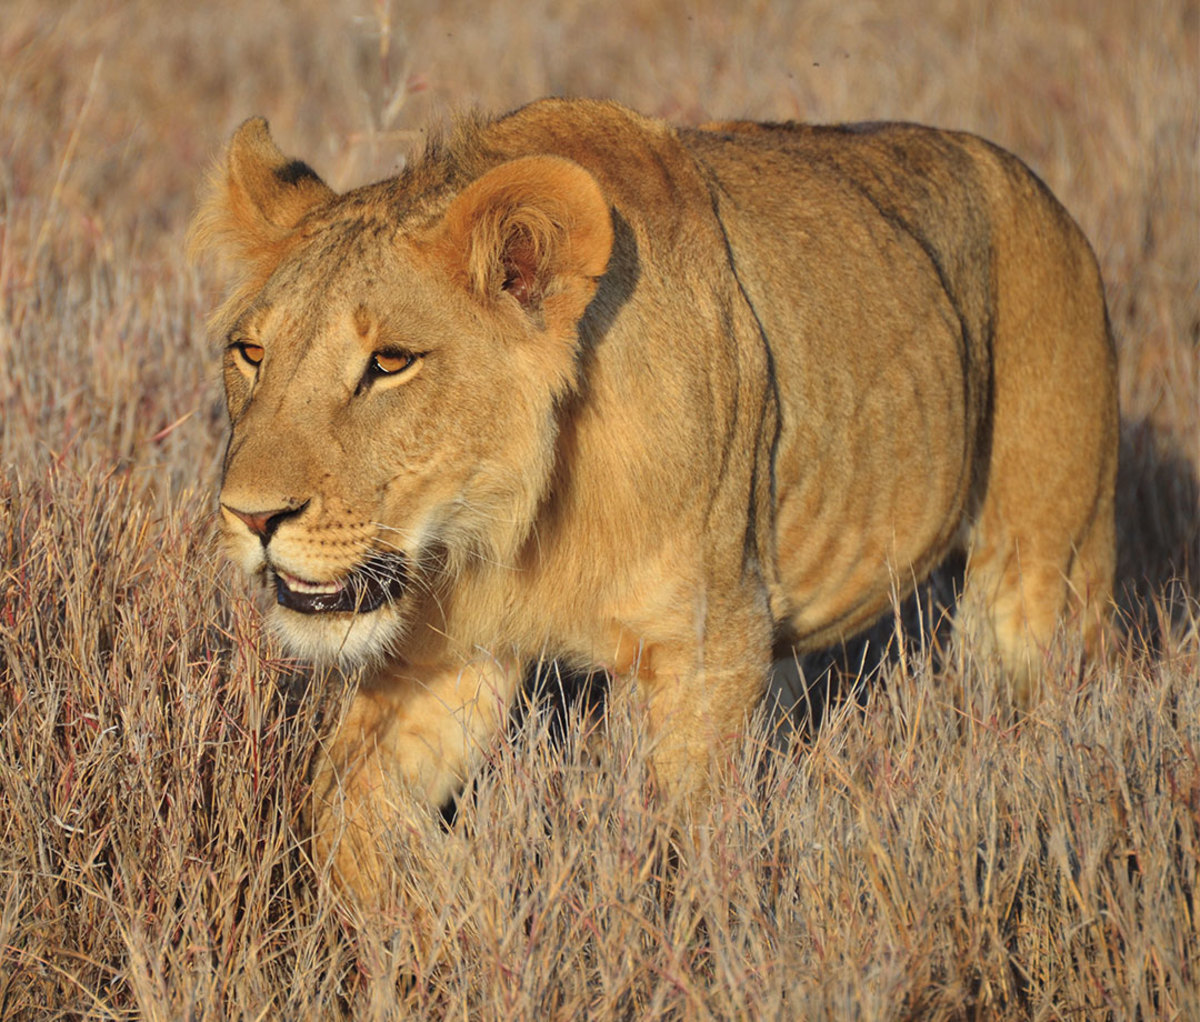 Lionness stalking in grass